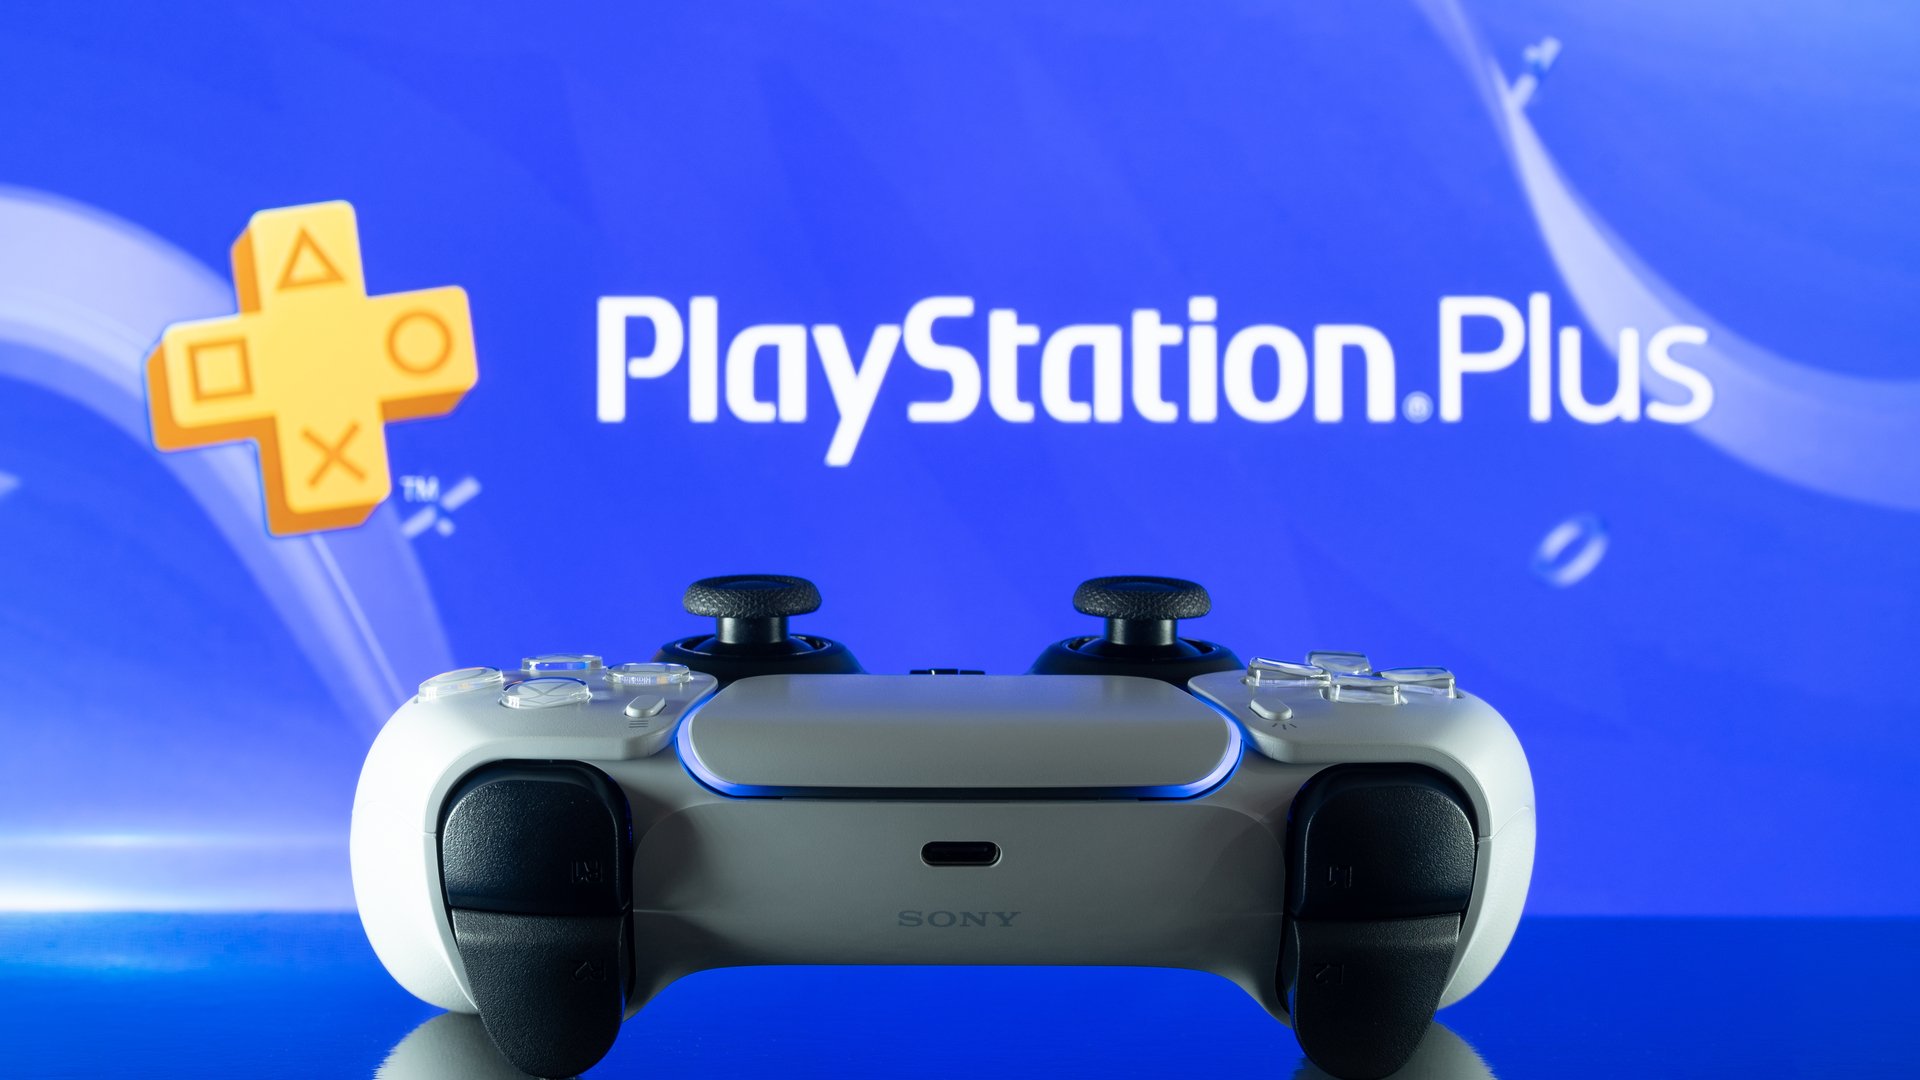 Controller PS5 DualSense davanti al logo PlayStation Plus